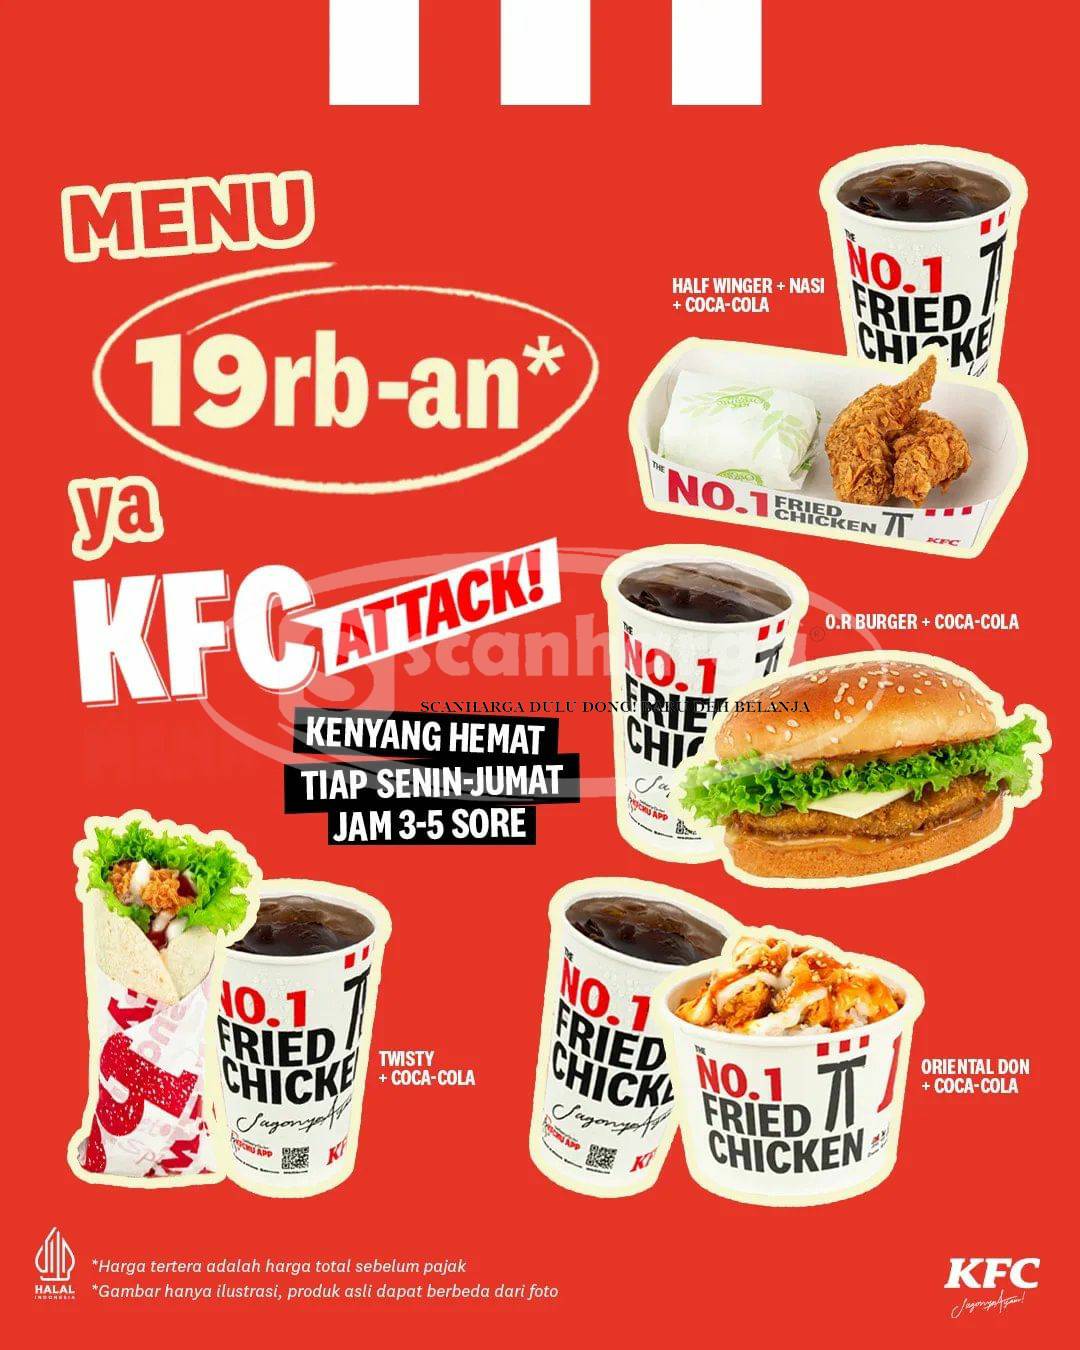 KFC ATTACK Promo Menu Rp. 19RB-AN*